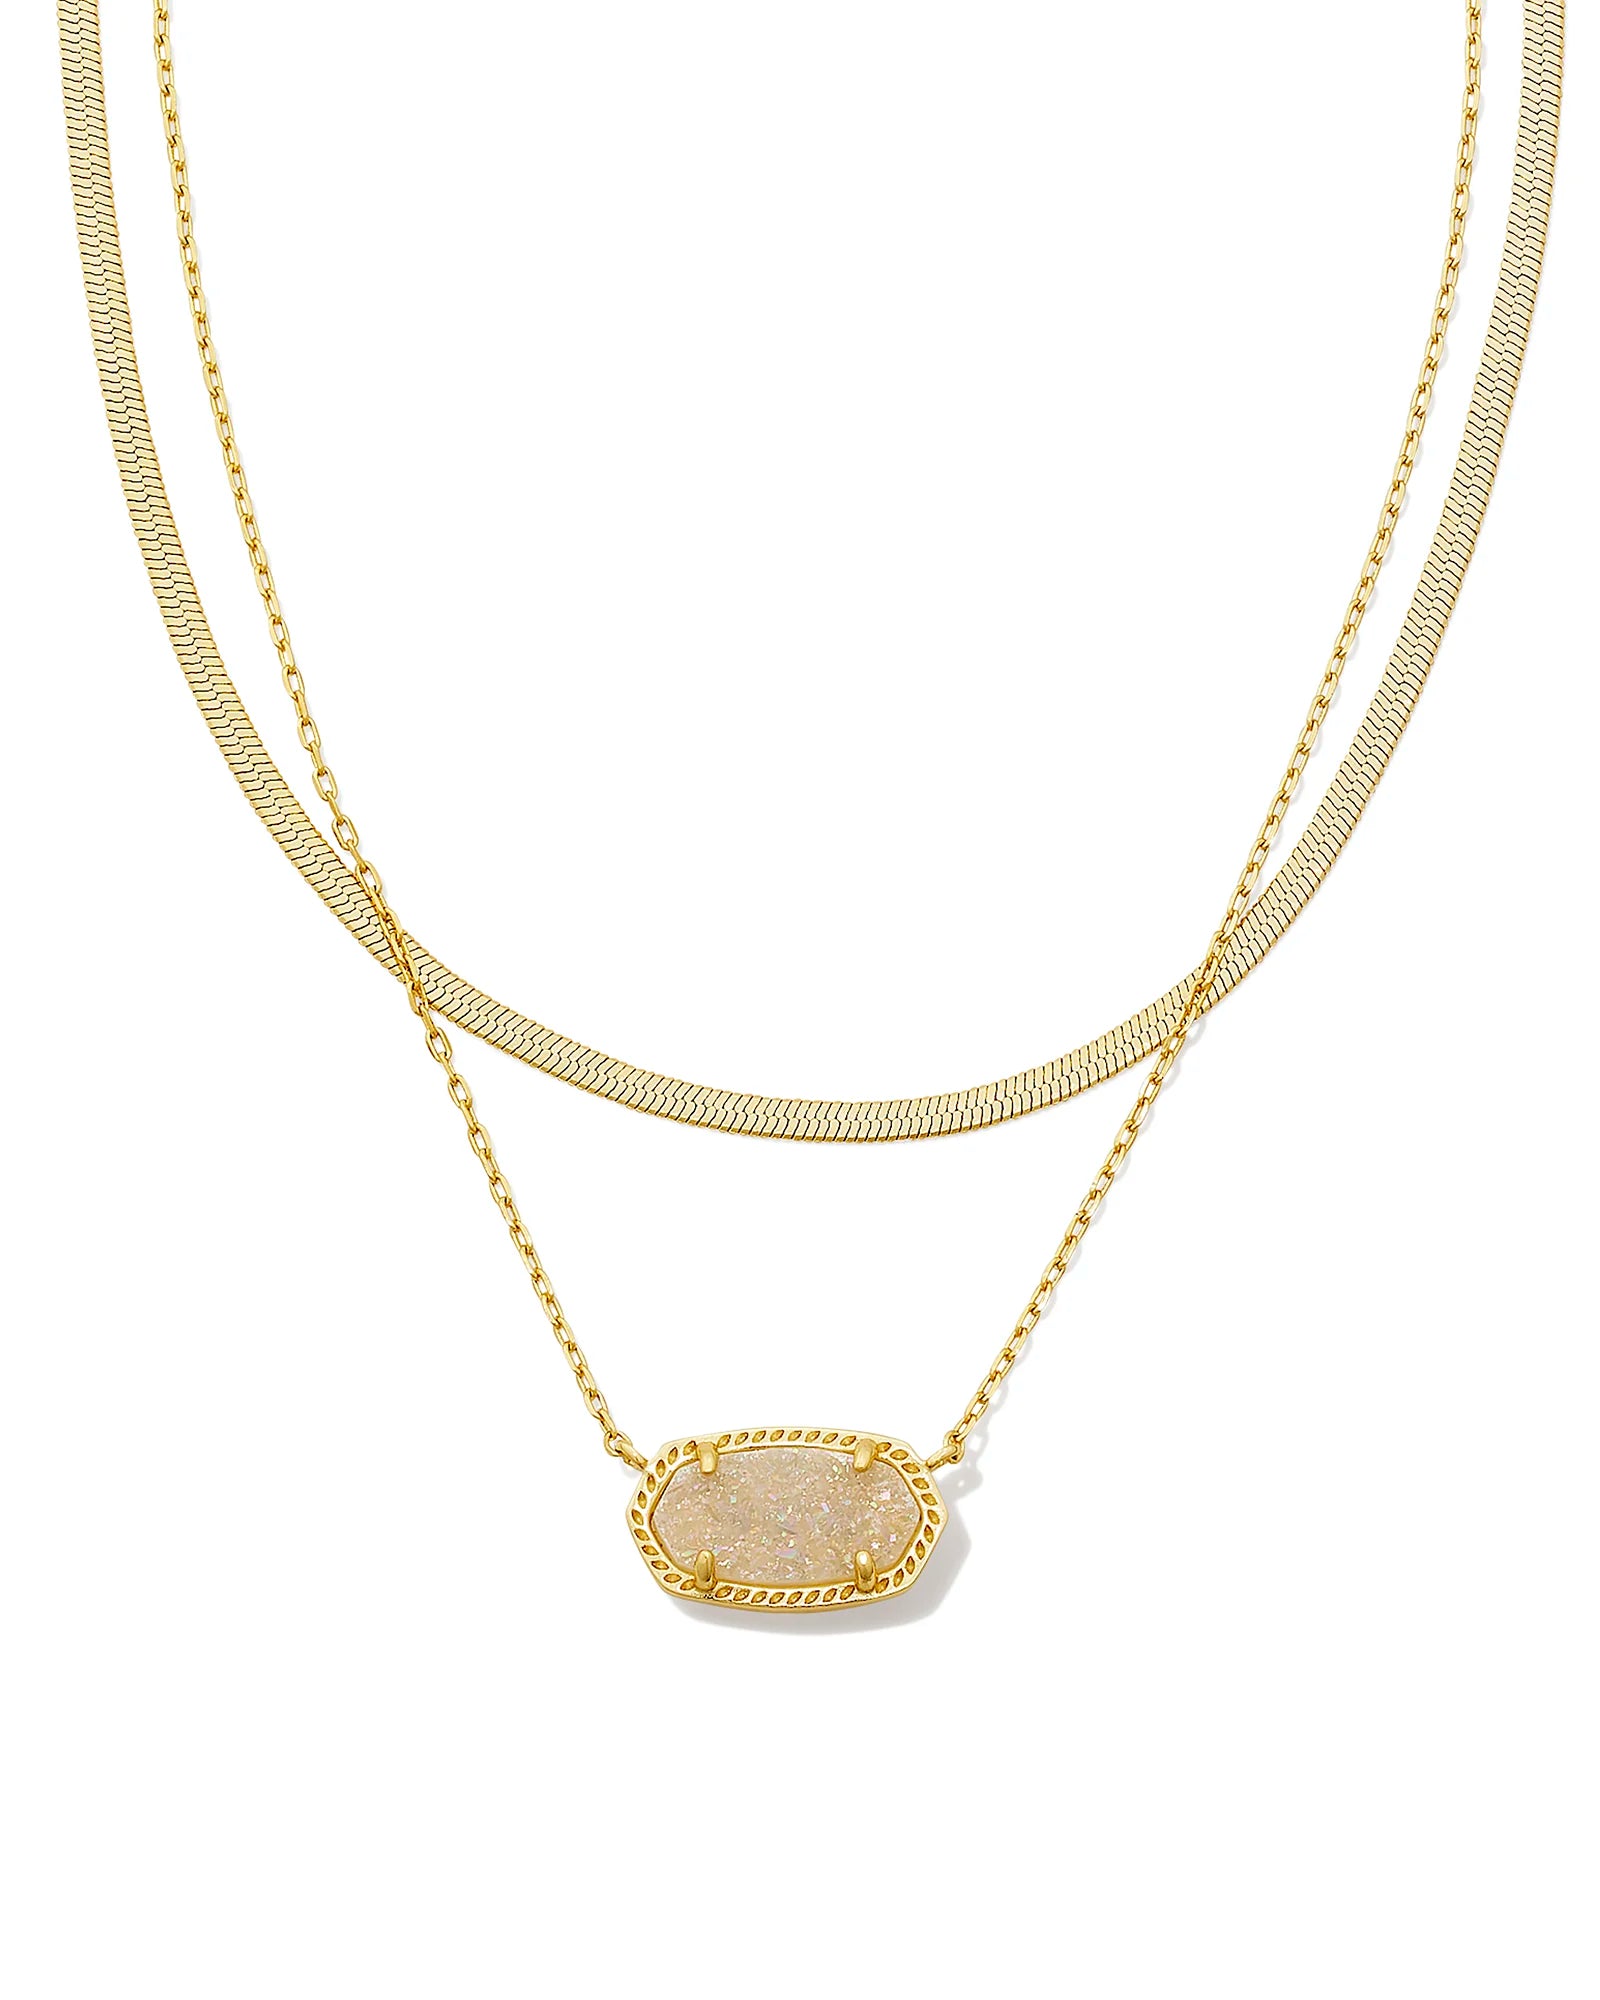 KENDRA SCOTT- Elisa Herringbone Gold Multi Strand Necklace in Gold Metal Iridescent Drusy